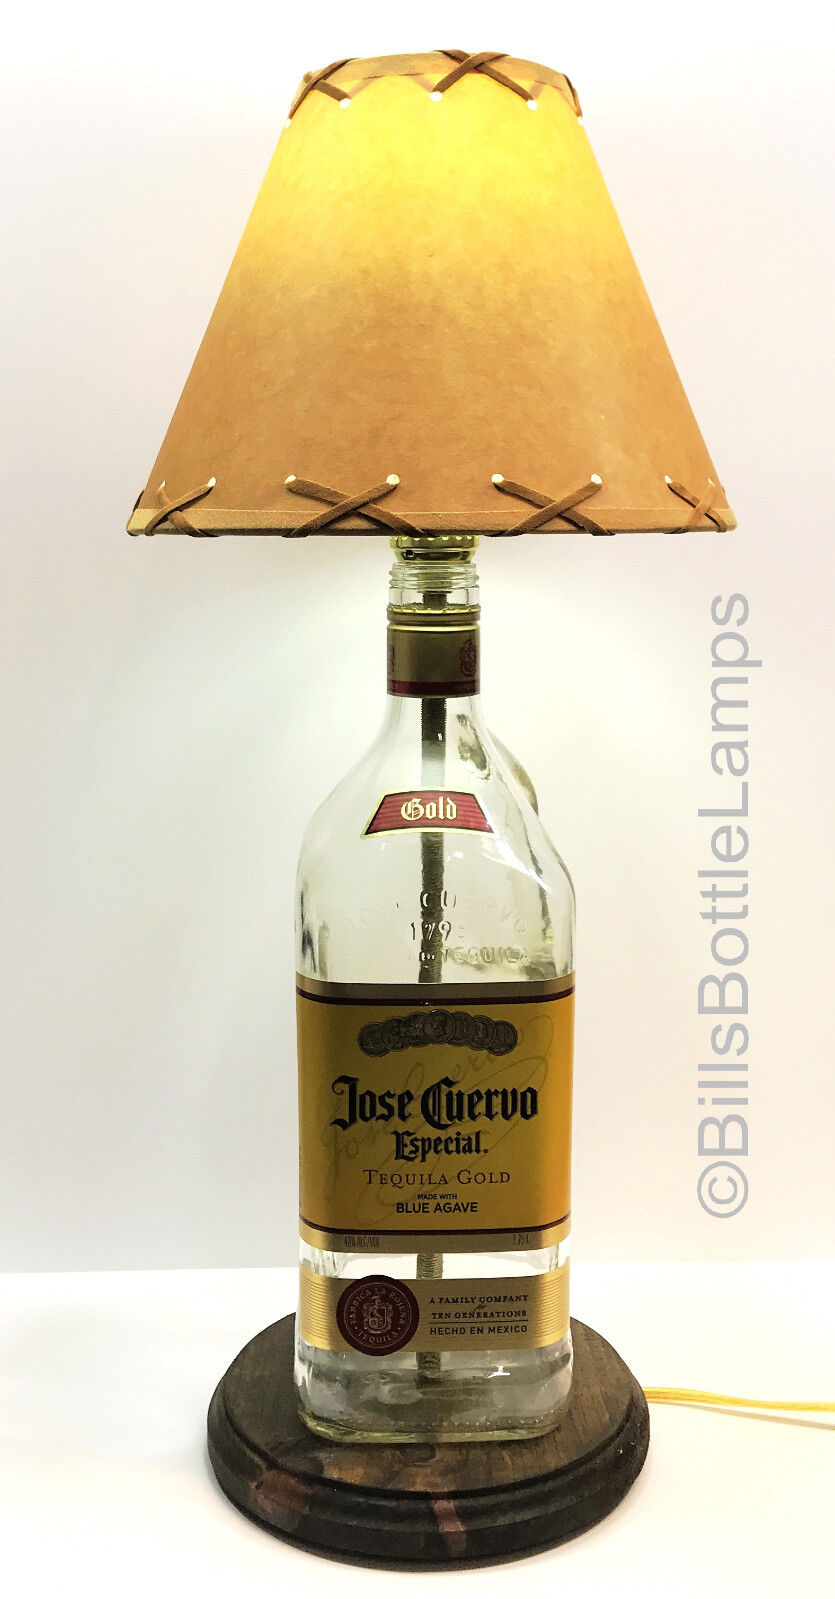 JOSE CUERVO ESPECIAL GOLD Large 1.75L Liquor Bottle TABLE LAMP Light & Wood Base BillsBottleLamps.com - фотография #9